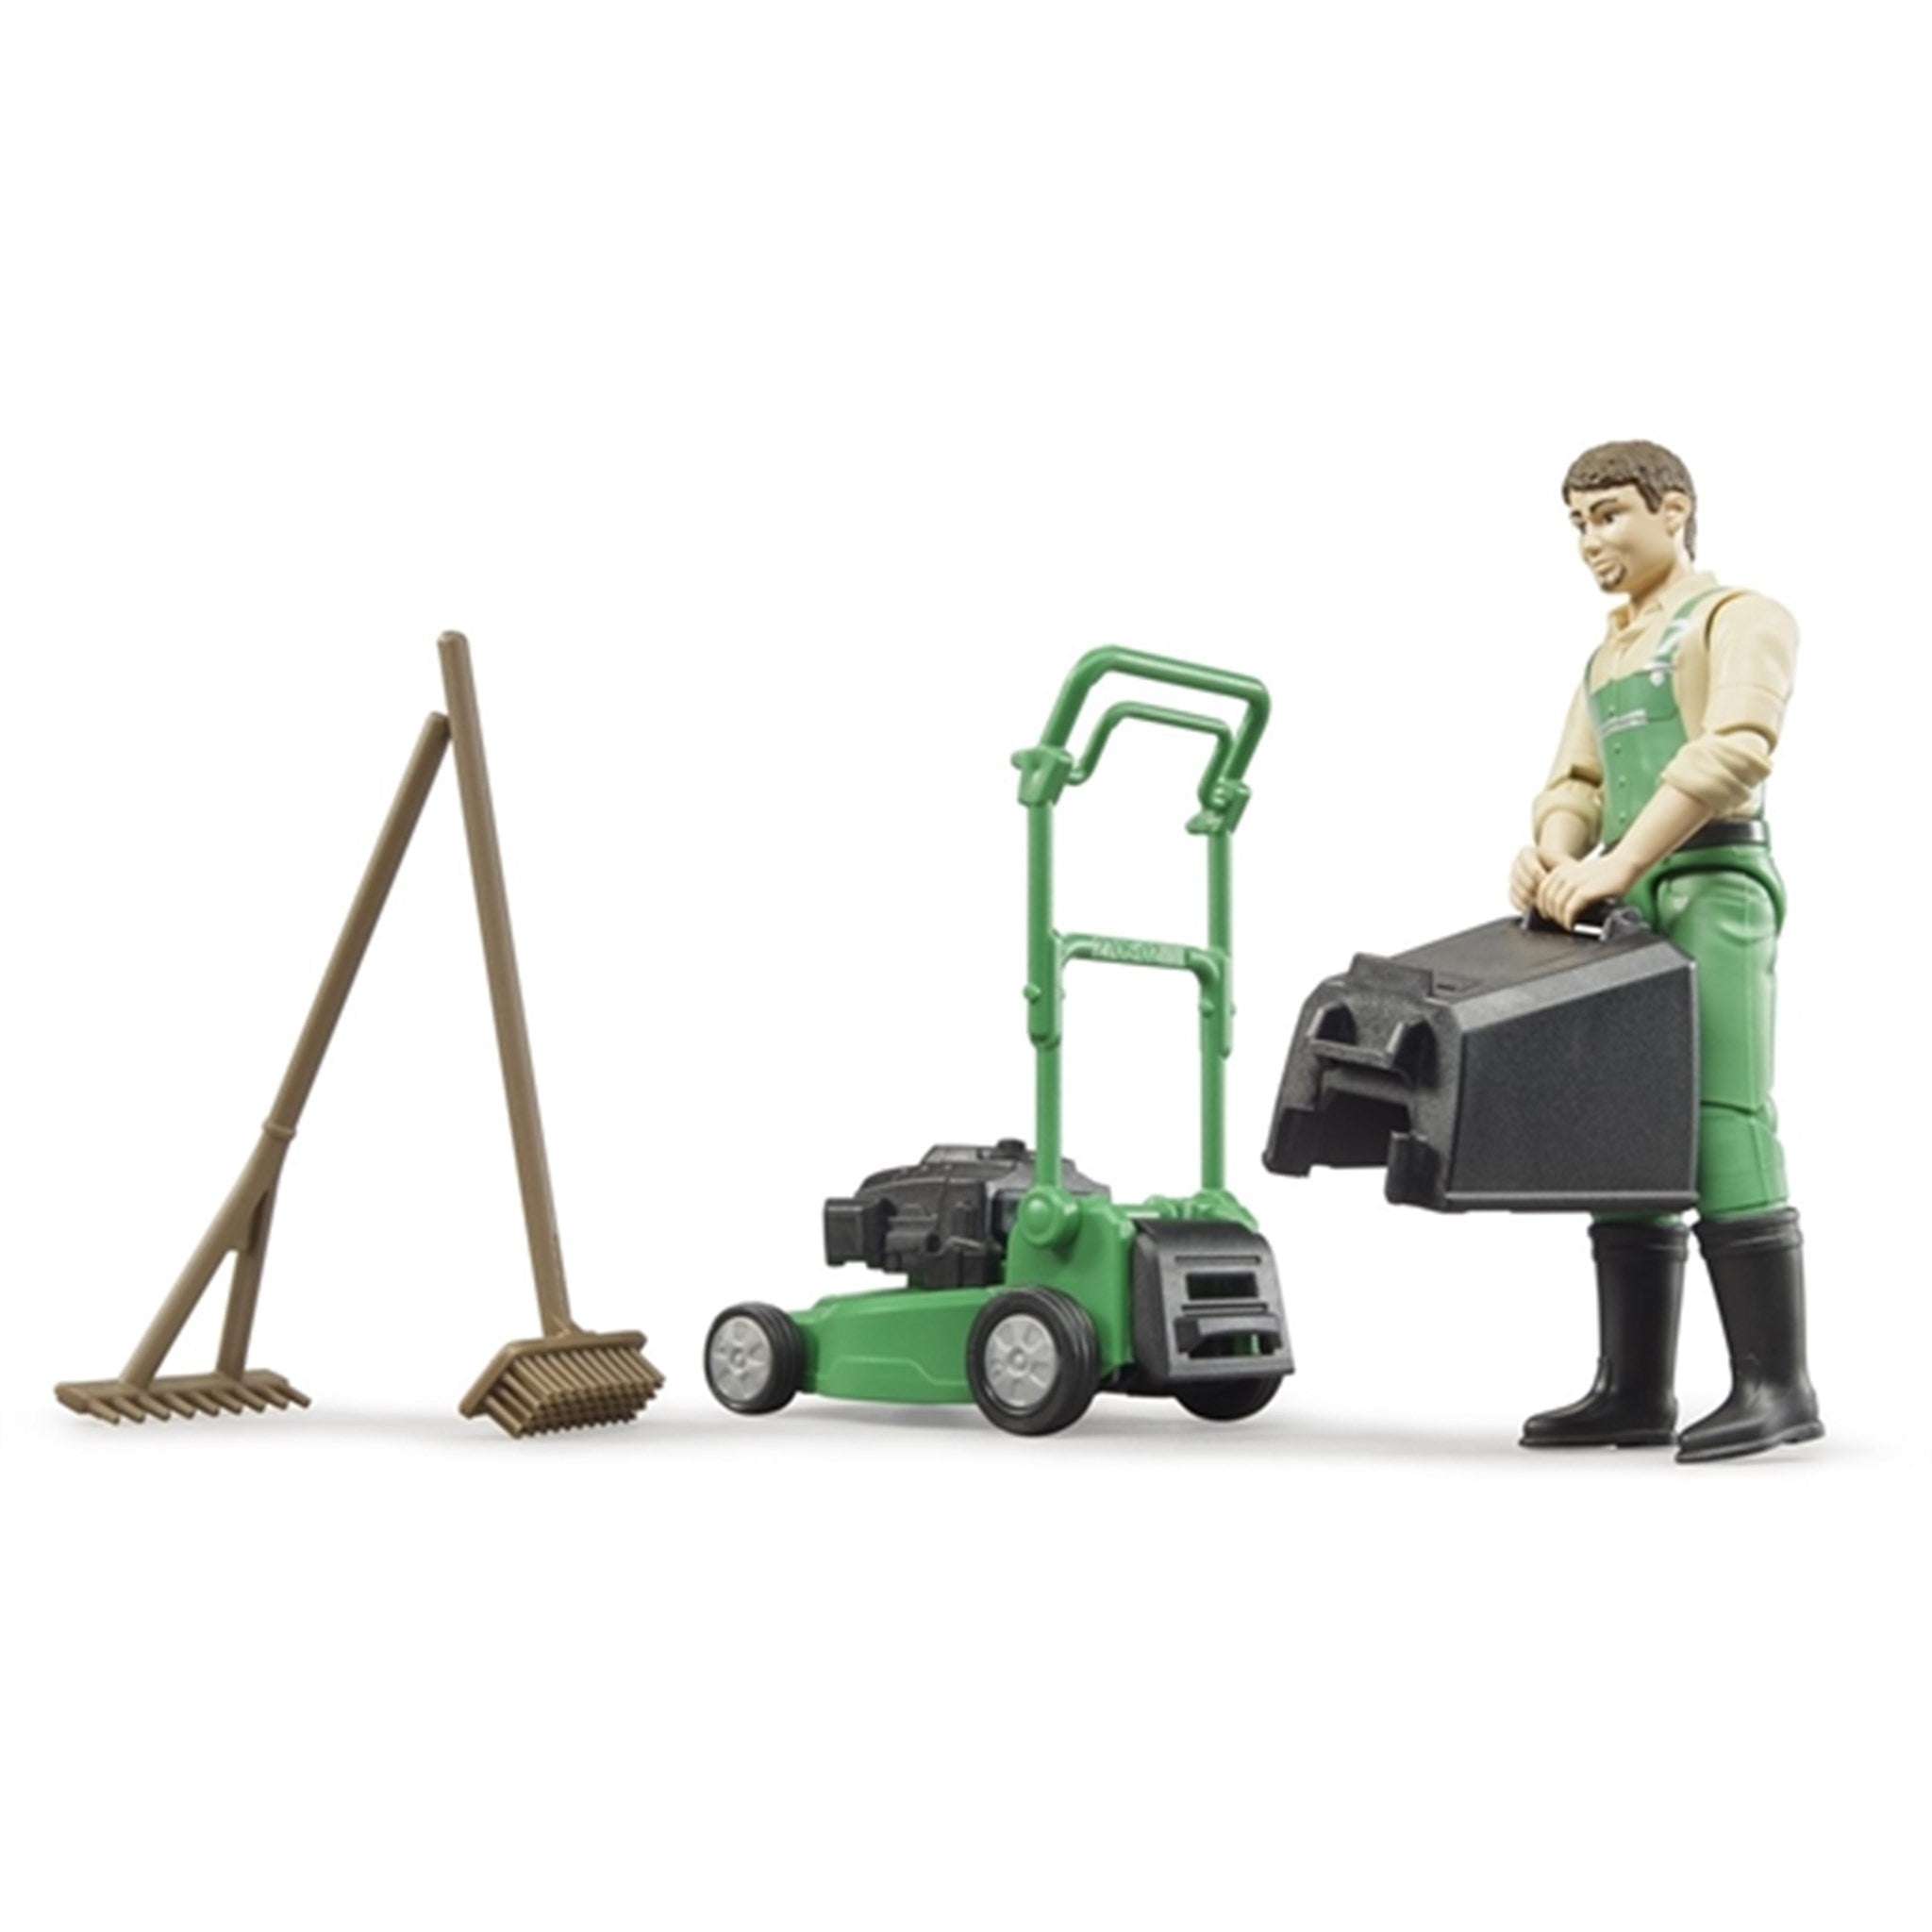 Bruder Bworld Gardener with Lawn Mower and Equipment 2